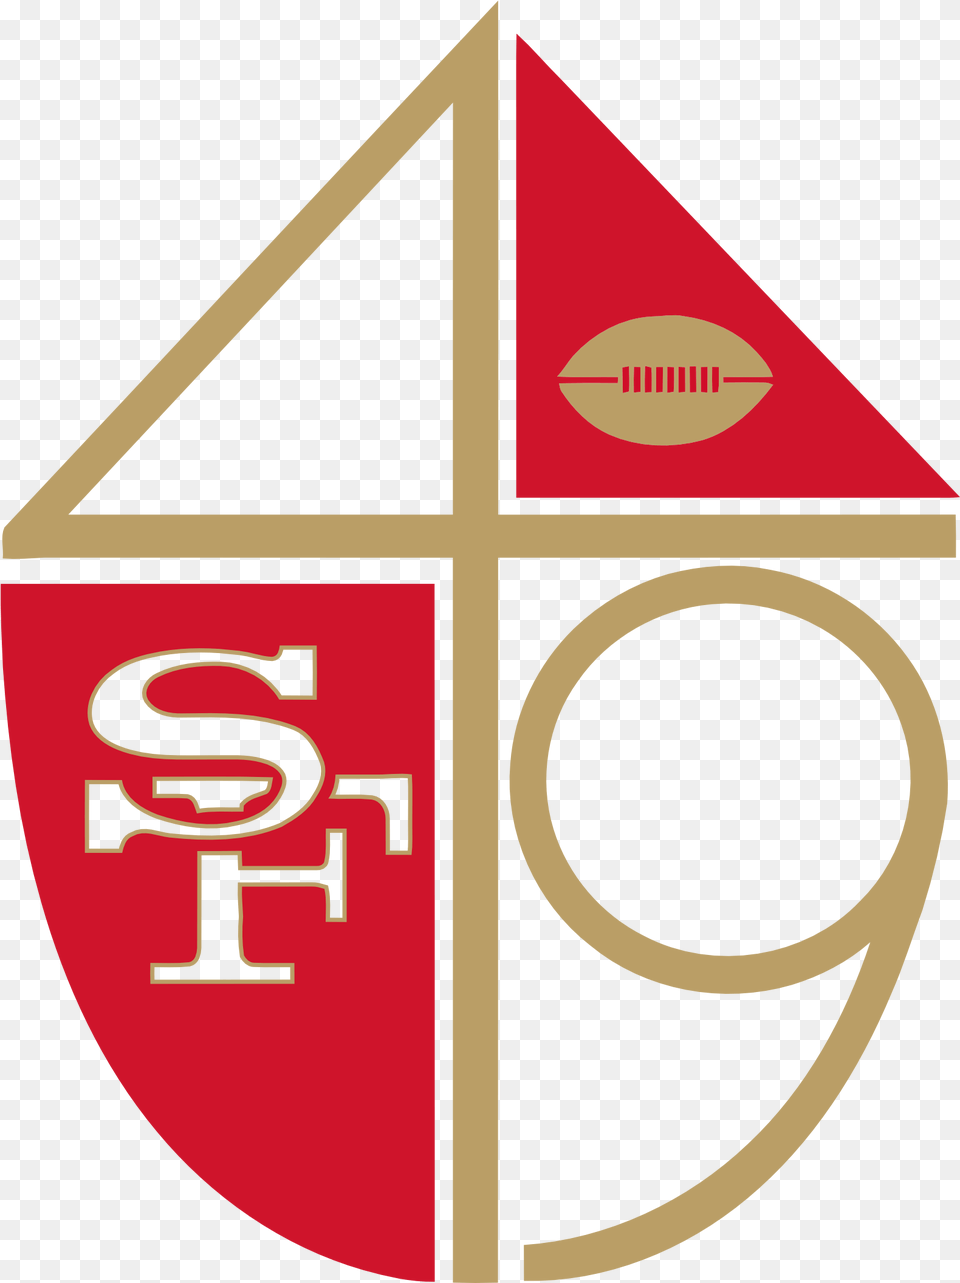 49ers Logo The Image Logos De San Fransisco, Symbol Free Png